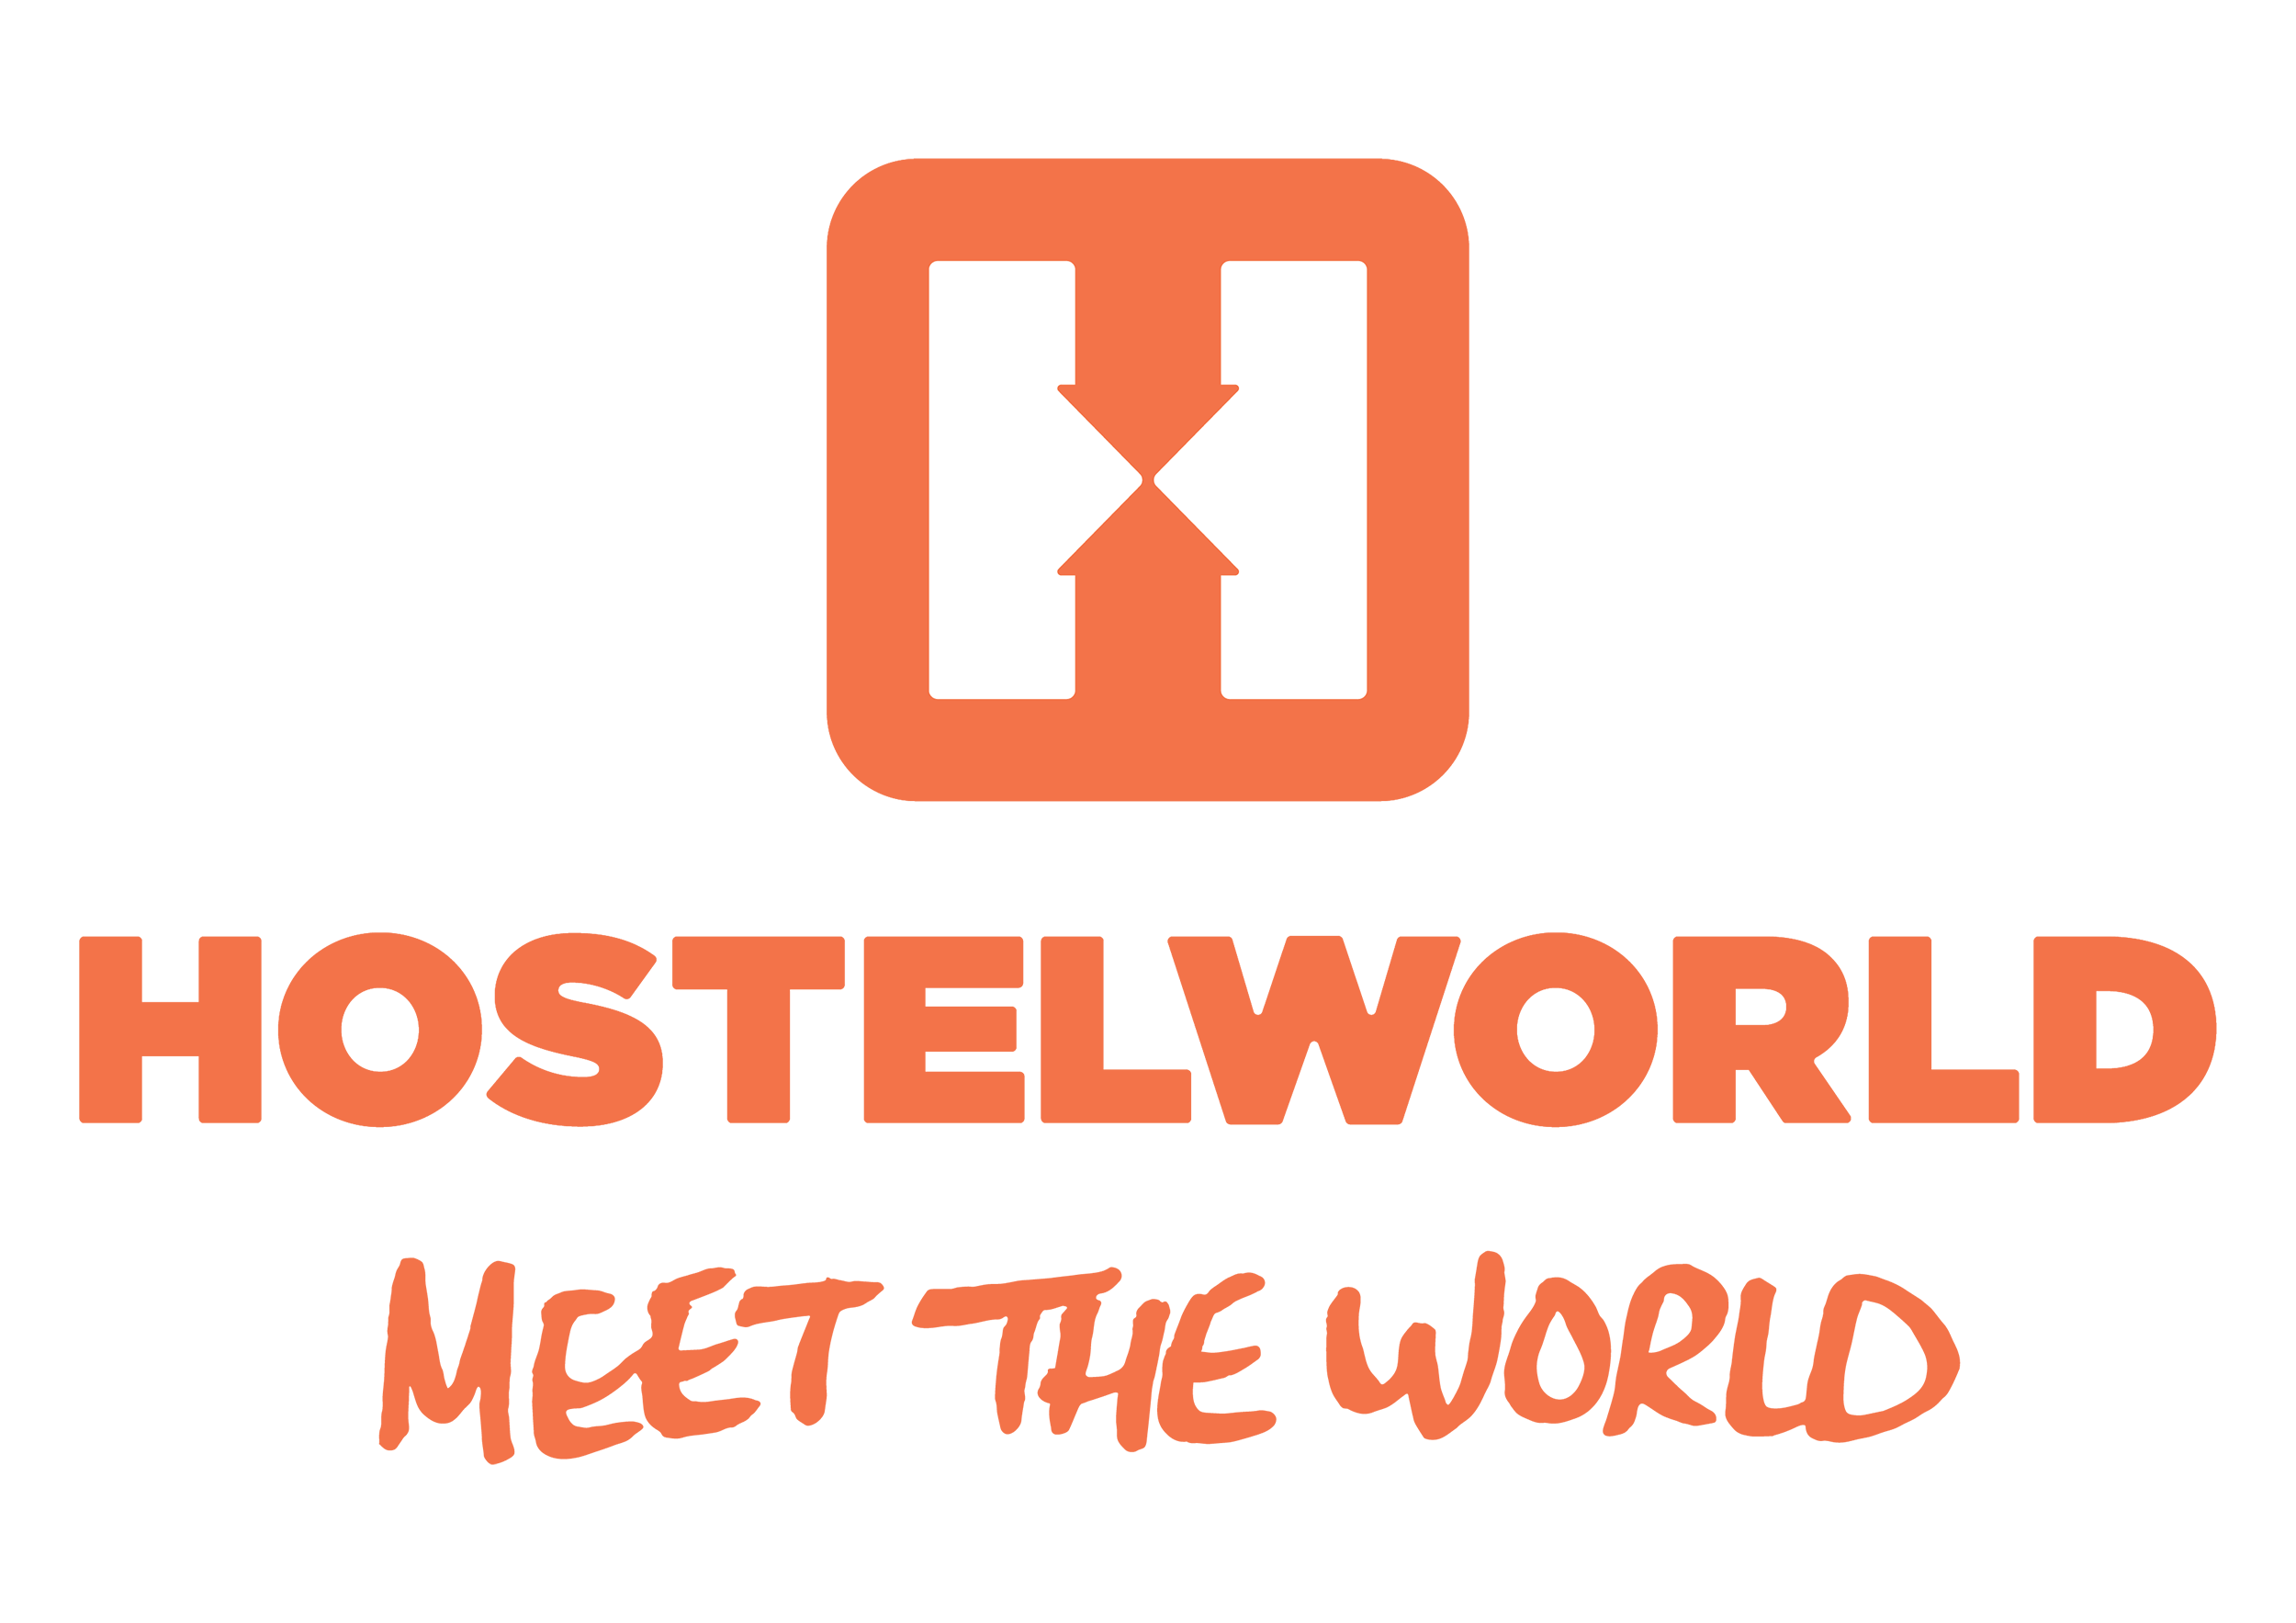 hostel world